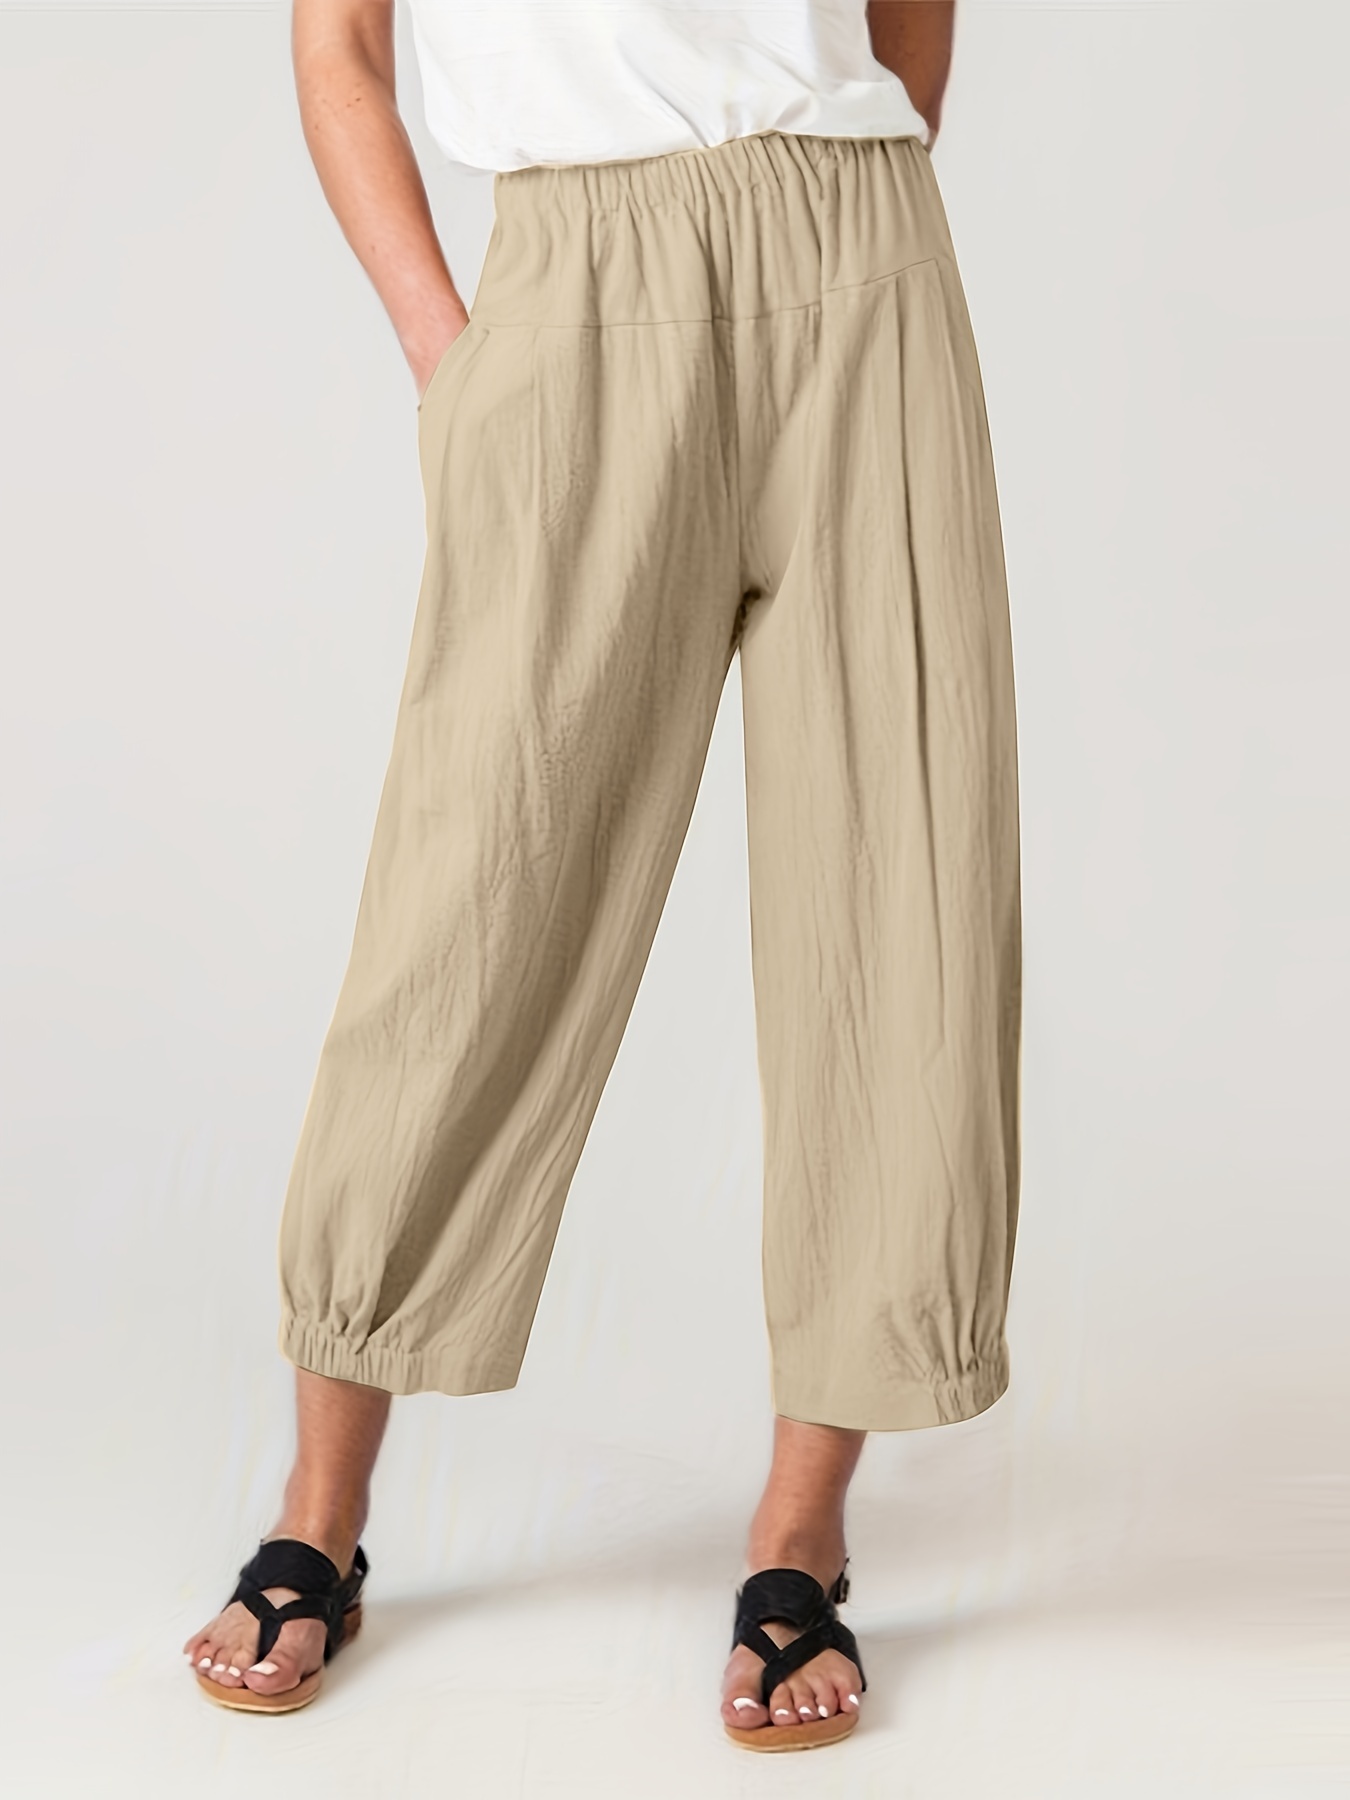 Wide Leg Capri Pants, High Waist Summer Casual Pants, Women's Clothing